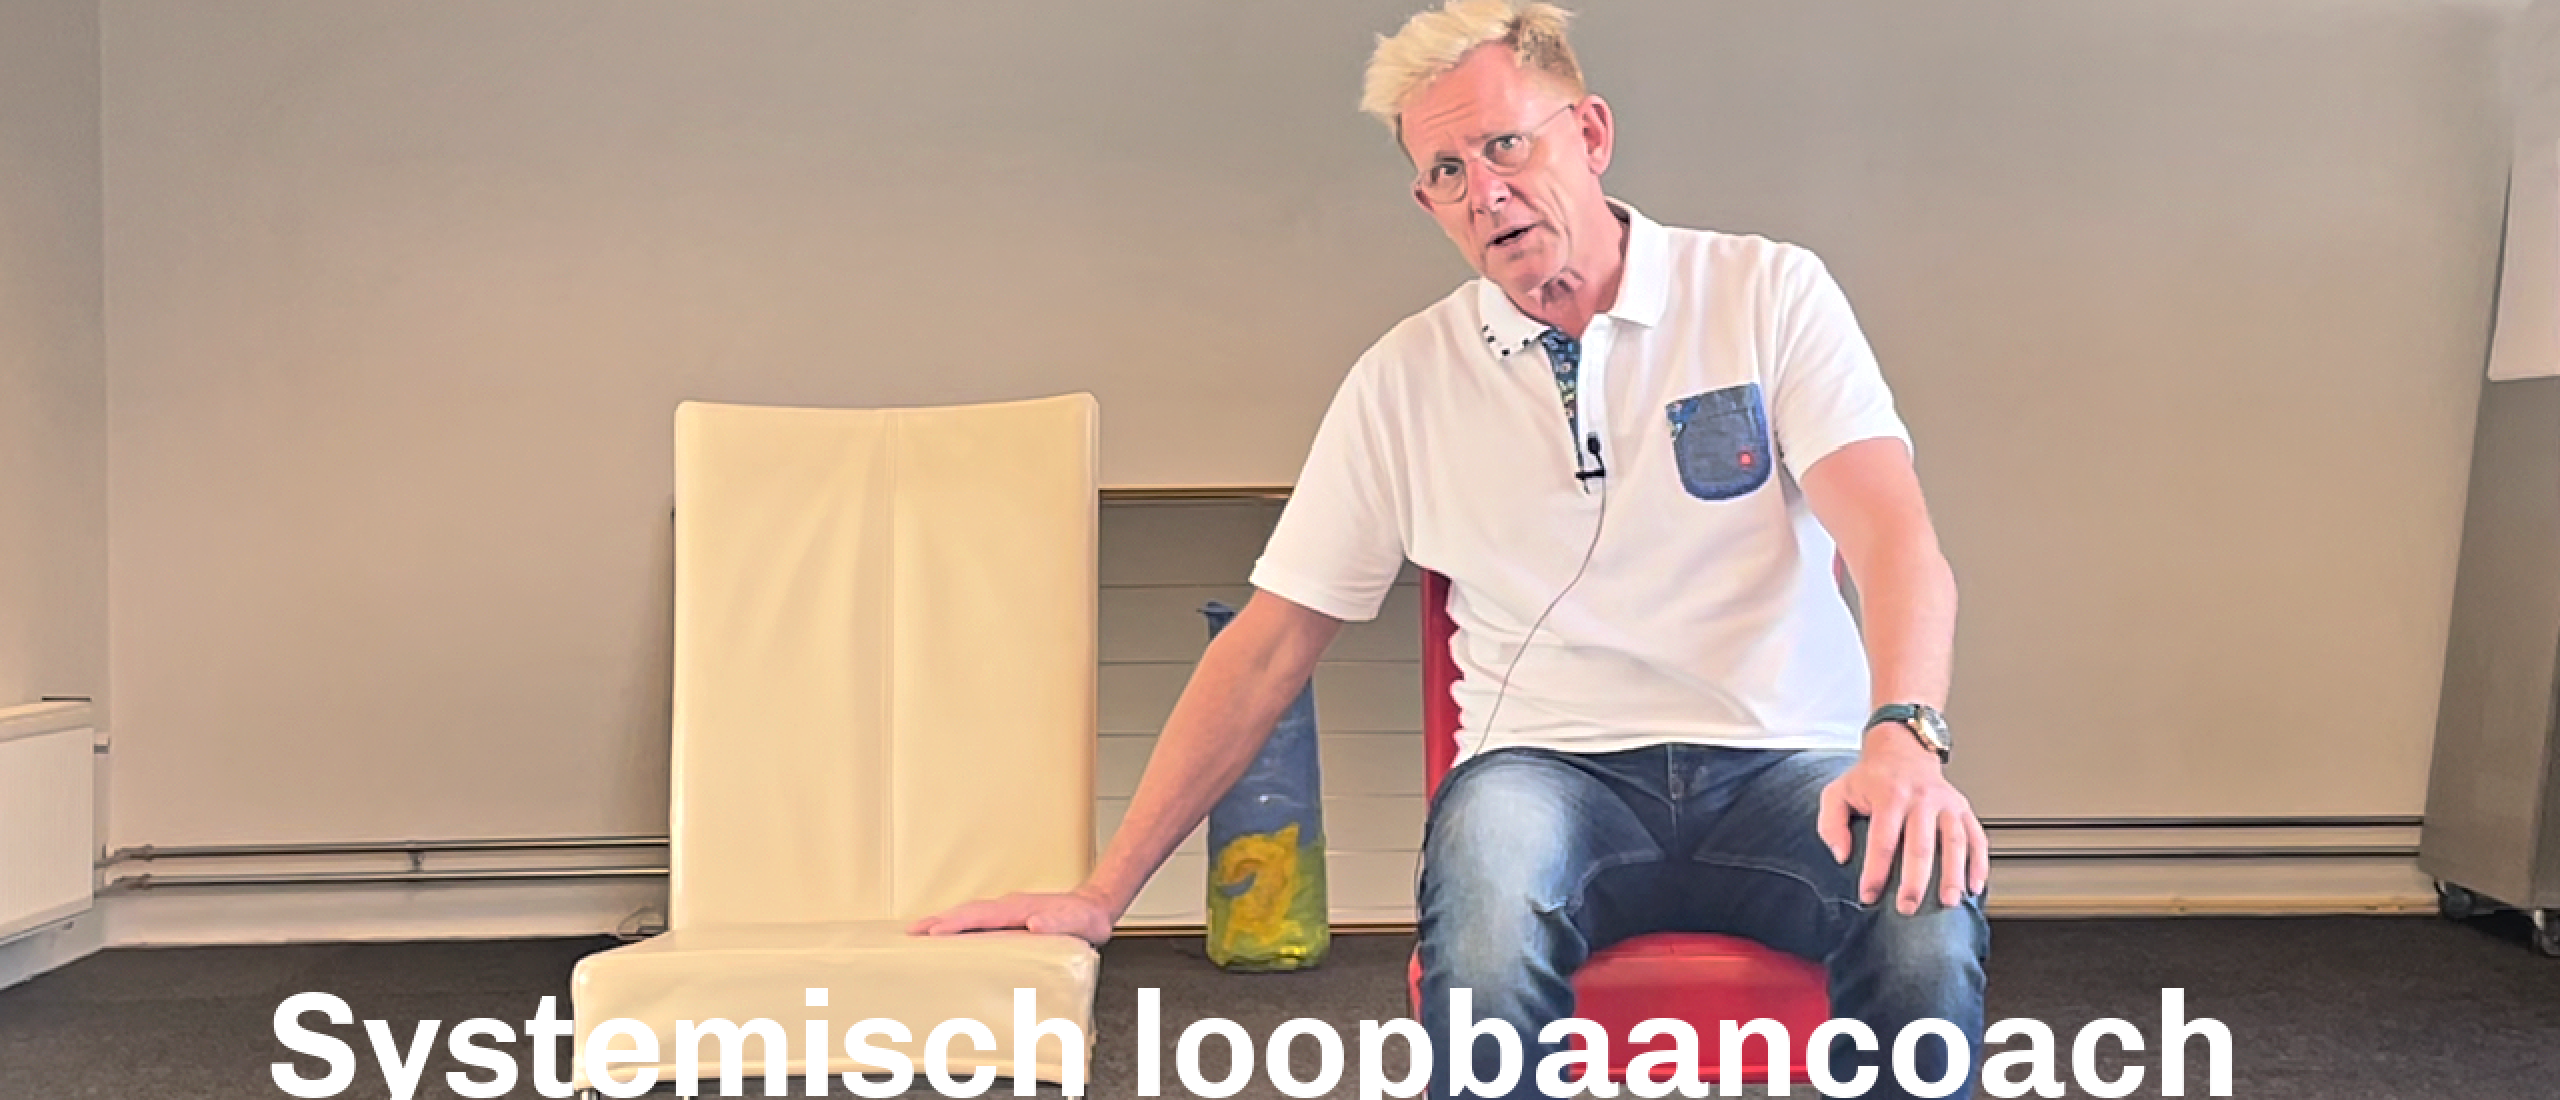 Systemisch loopbaancoach Bodo in Utrecht